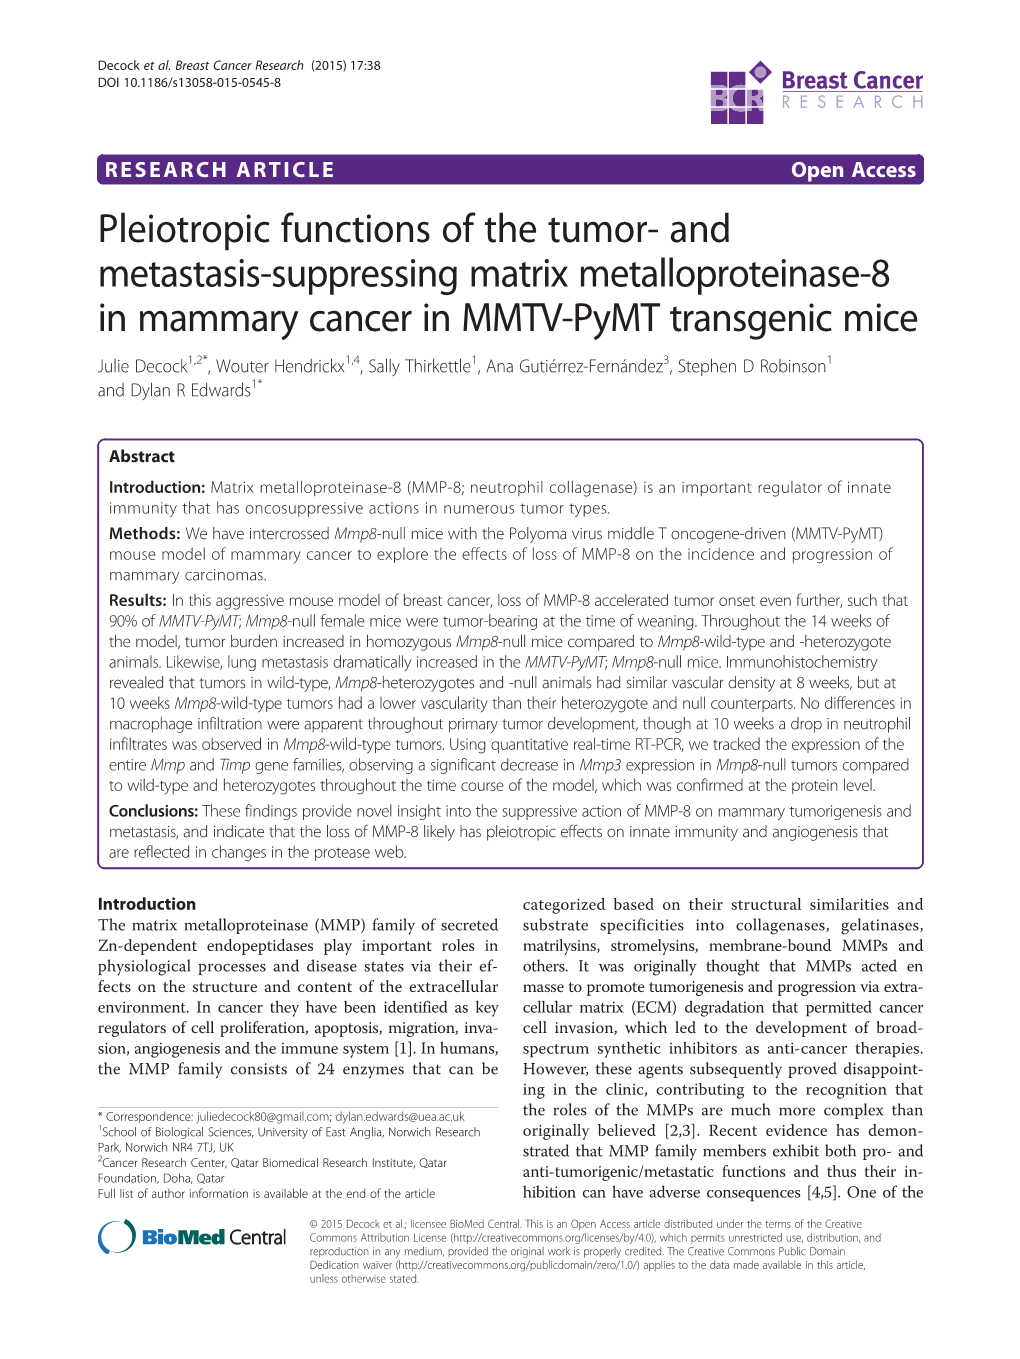 Pleiotropic Functions of the Tumor- and Metastasis-Suppressing Matrix